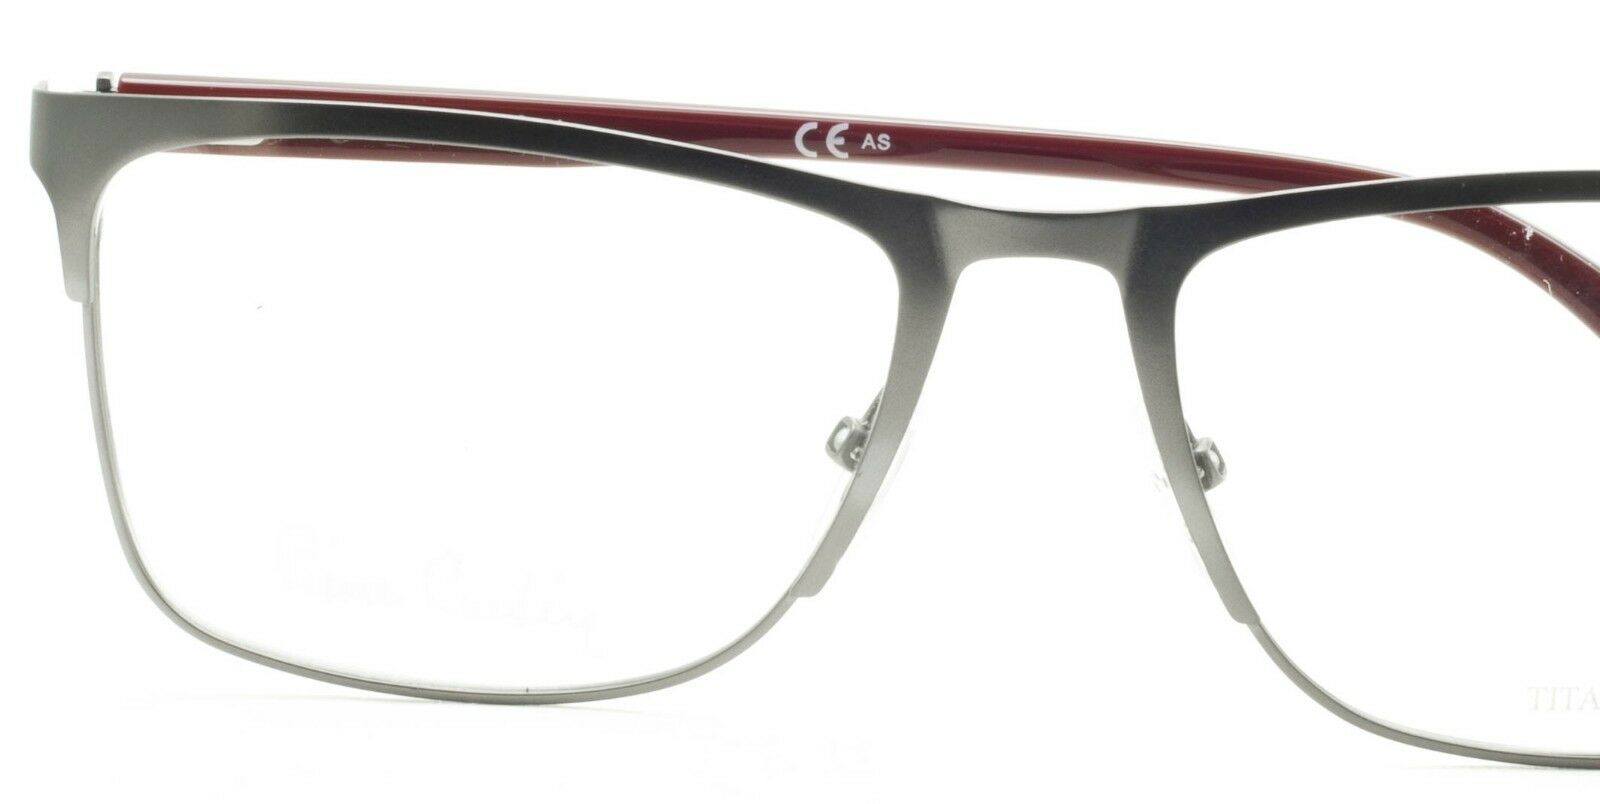 Pierre Cardin PC 6814 3S3 55mm RX Optical FRAMES Glasses Eyewear Eyeglasses- New